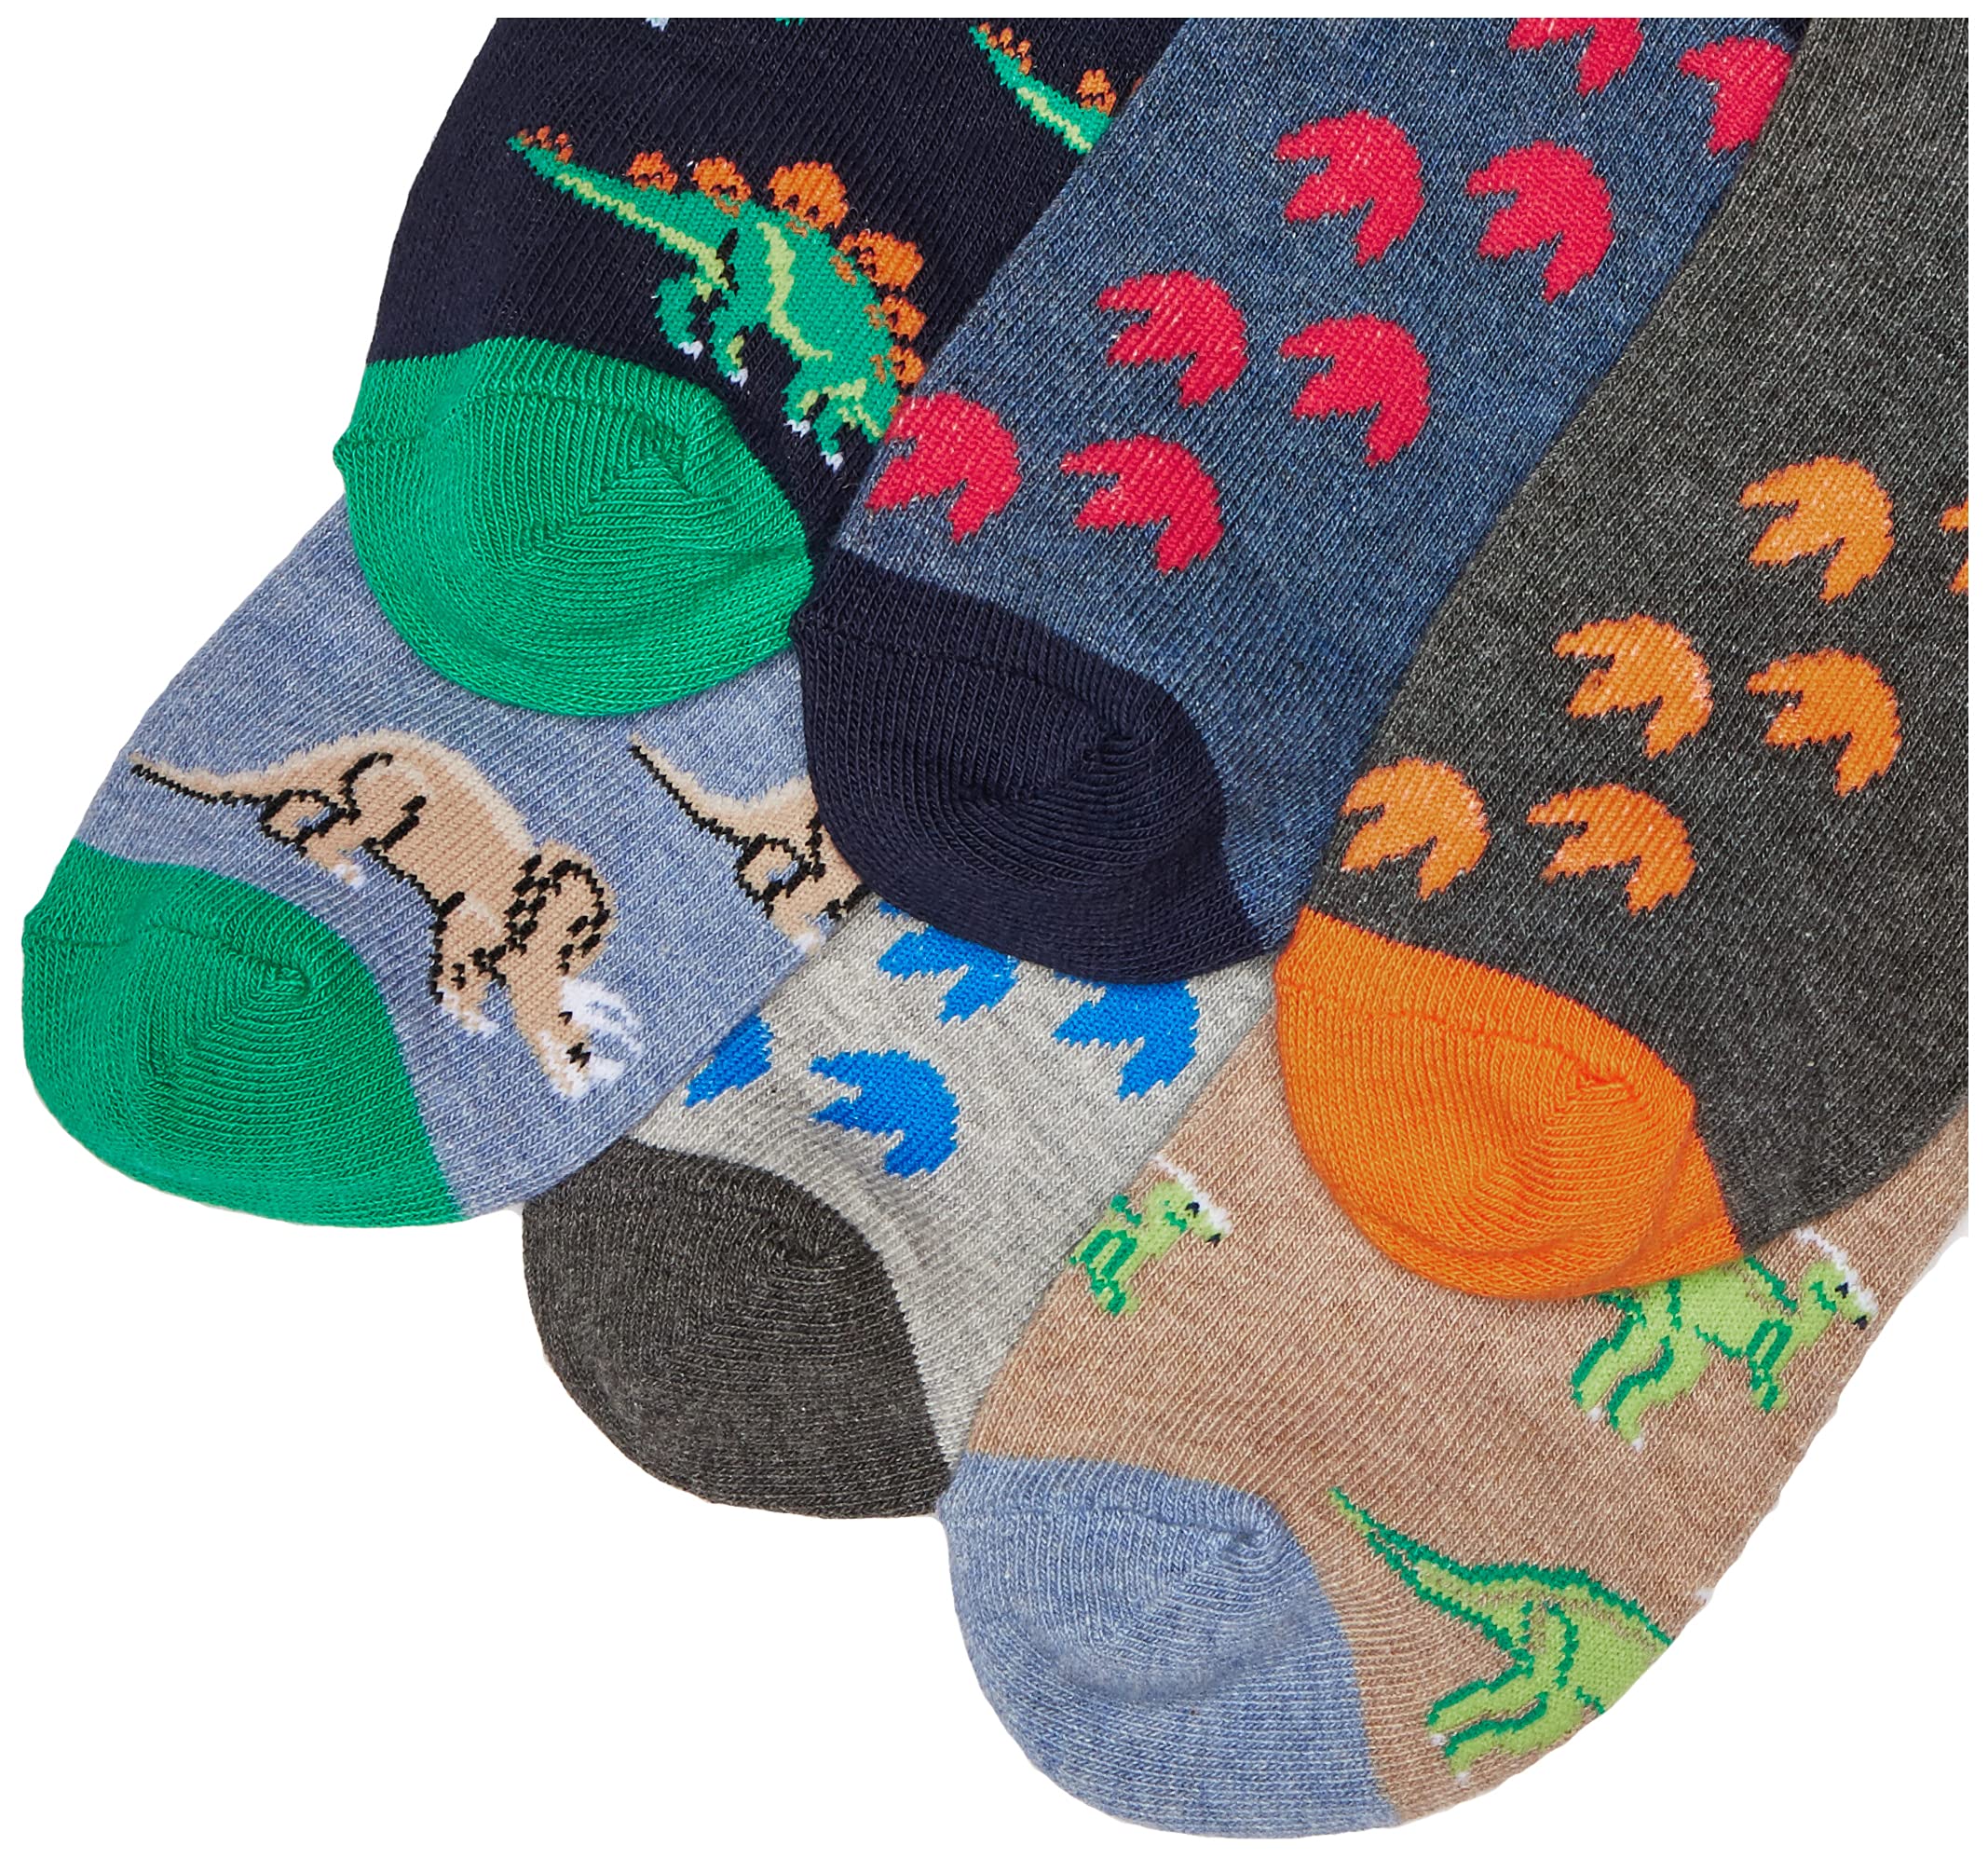 Jefferies Socks boys Boy s Dinosaur Pattern Cotton Crew Socks 6 Pack Multi Small, Multi, Small US